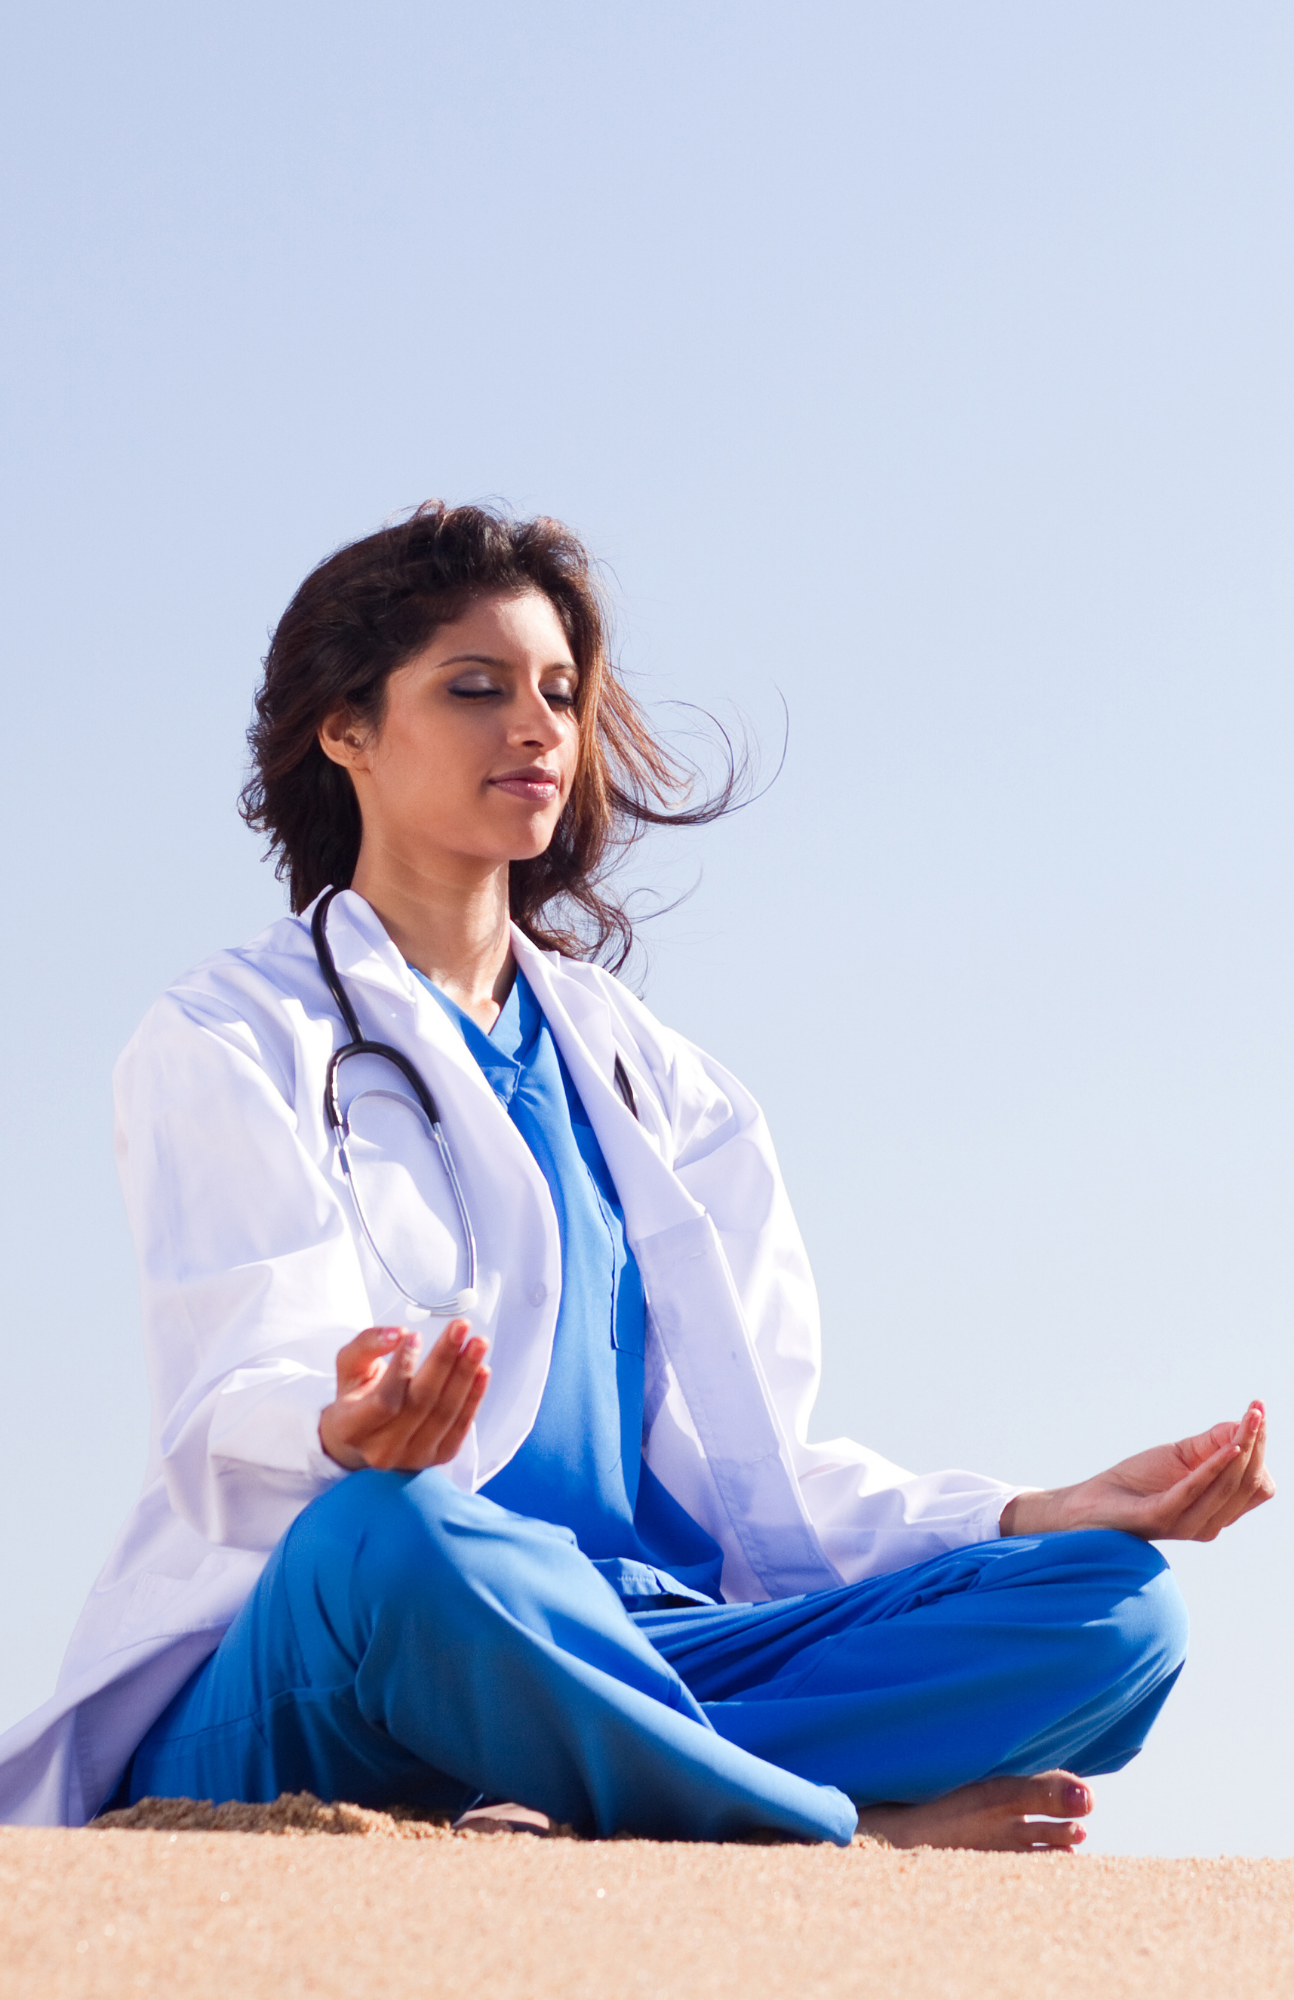 A female doctor meditating